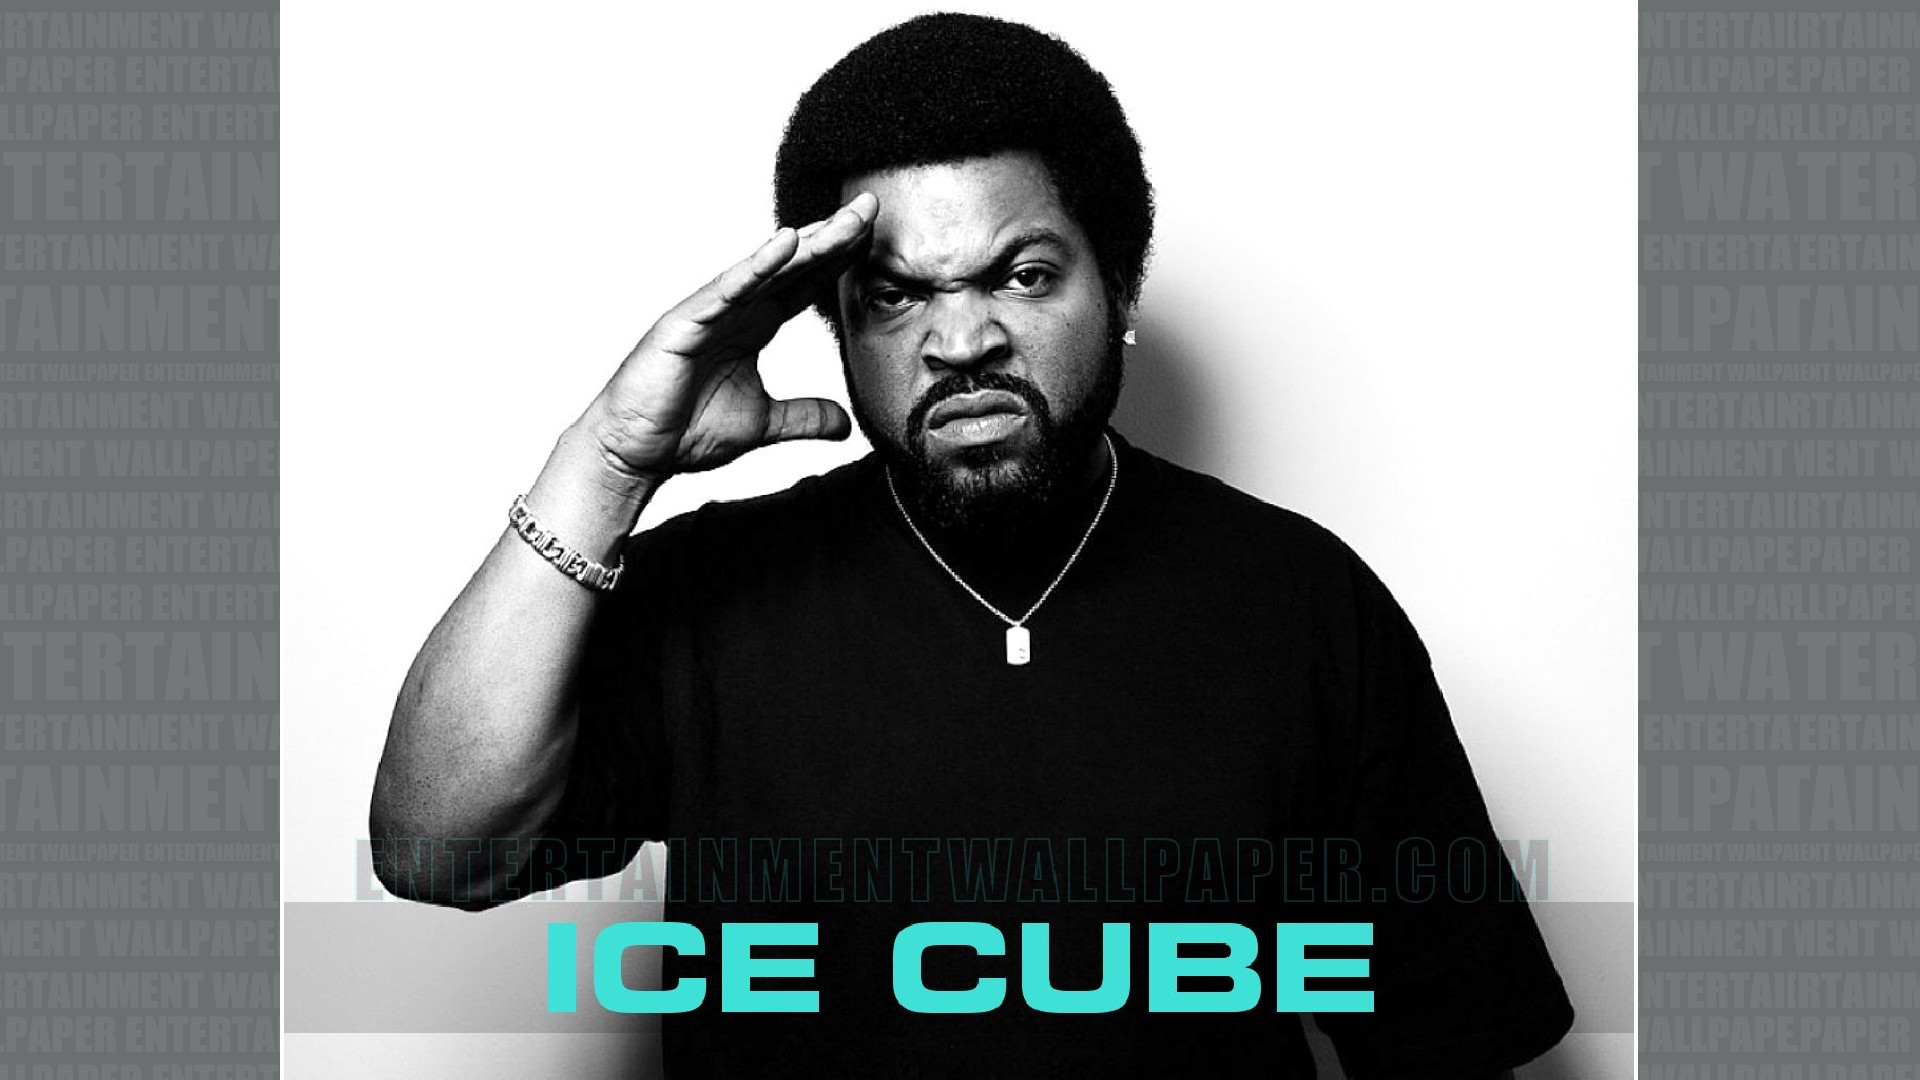 ice cube wallpaper,black,rapper,album cover,photography,music